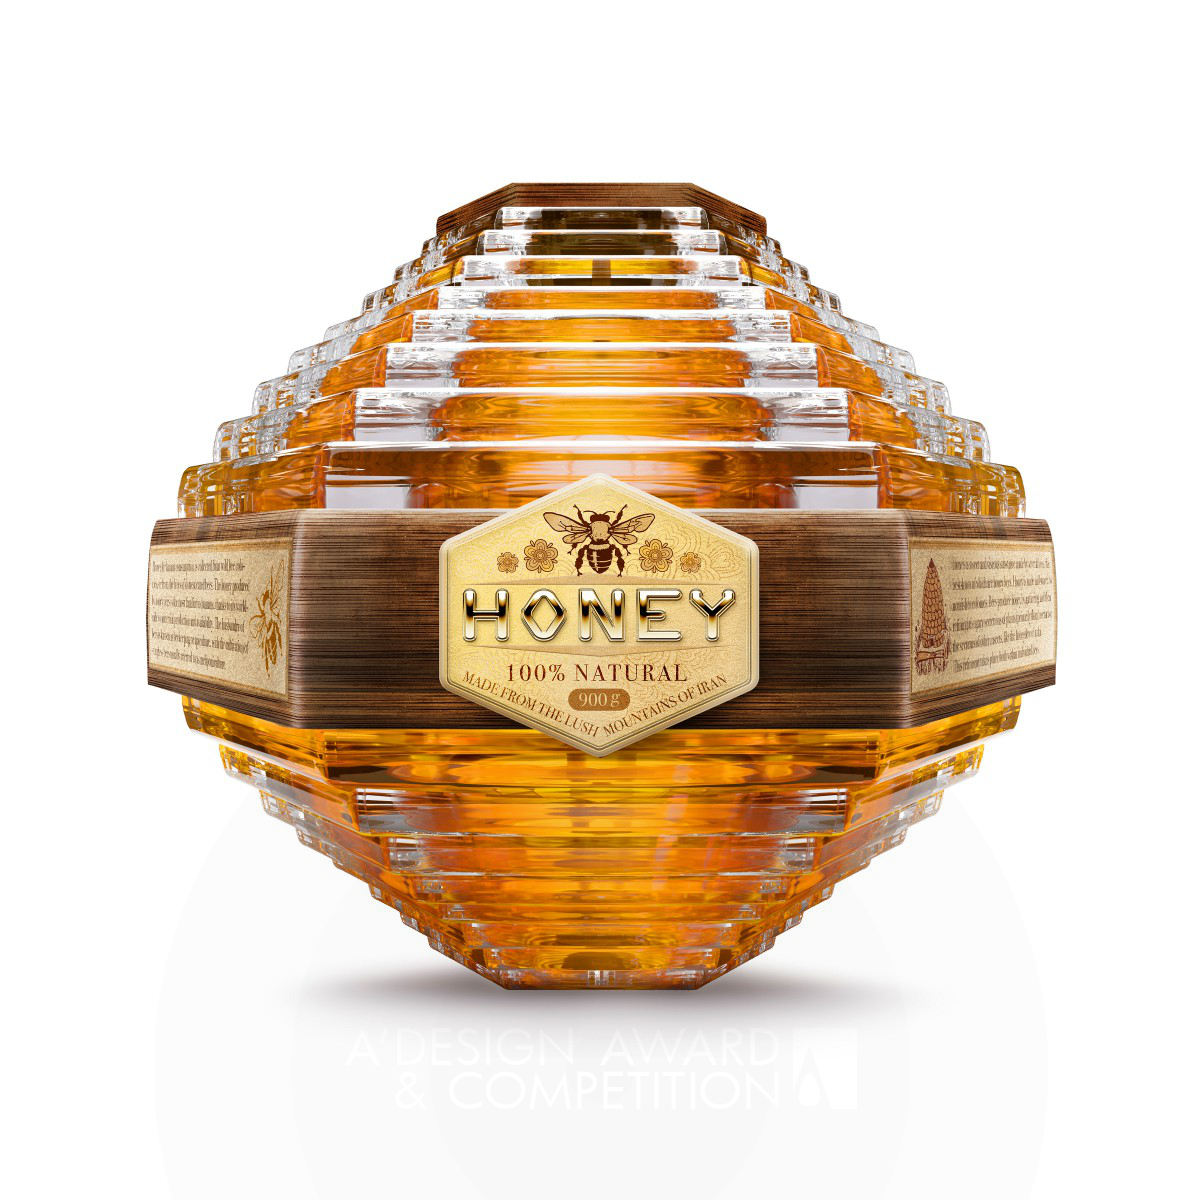 Wallrus Design Studio's "Honey" Wins Golden A' Packaging Design Award